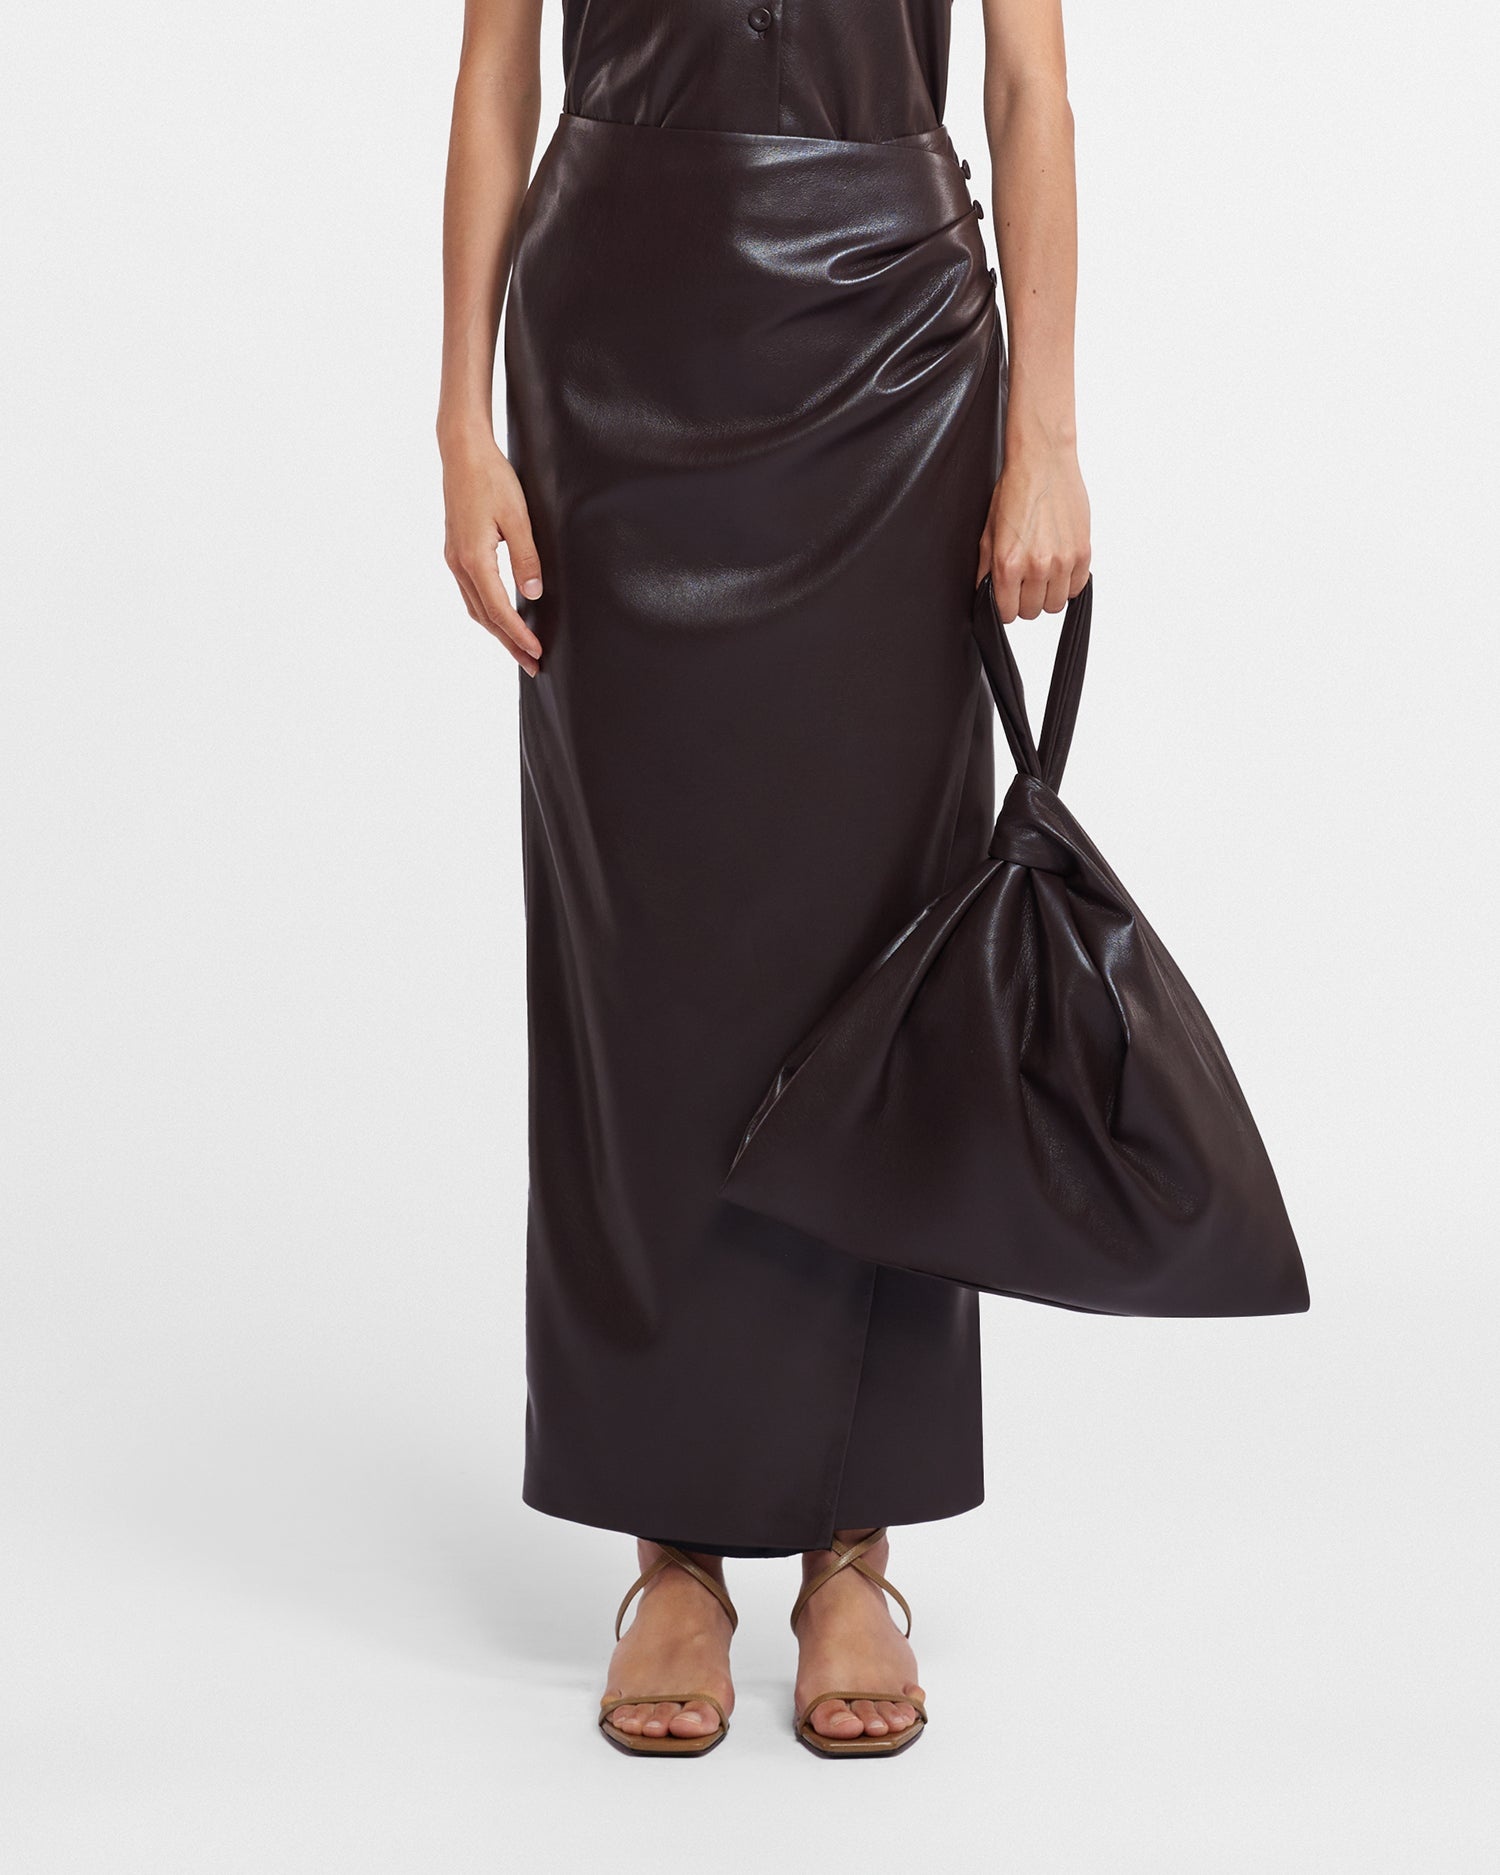 Okobor™ Alt-Leather Skirt - 4